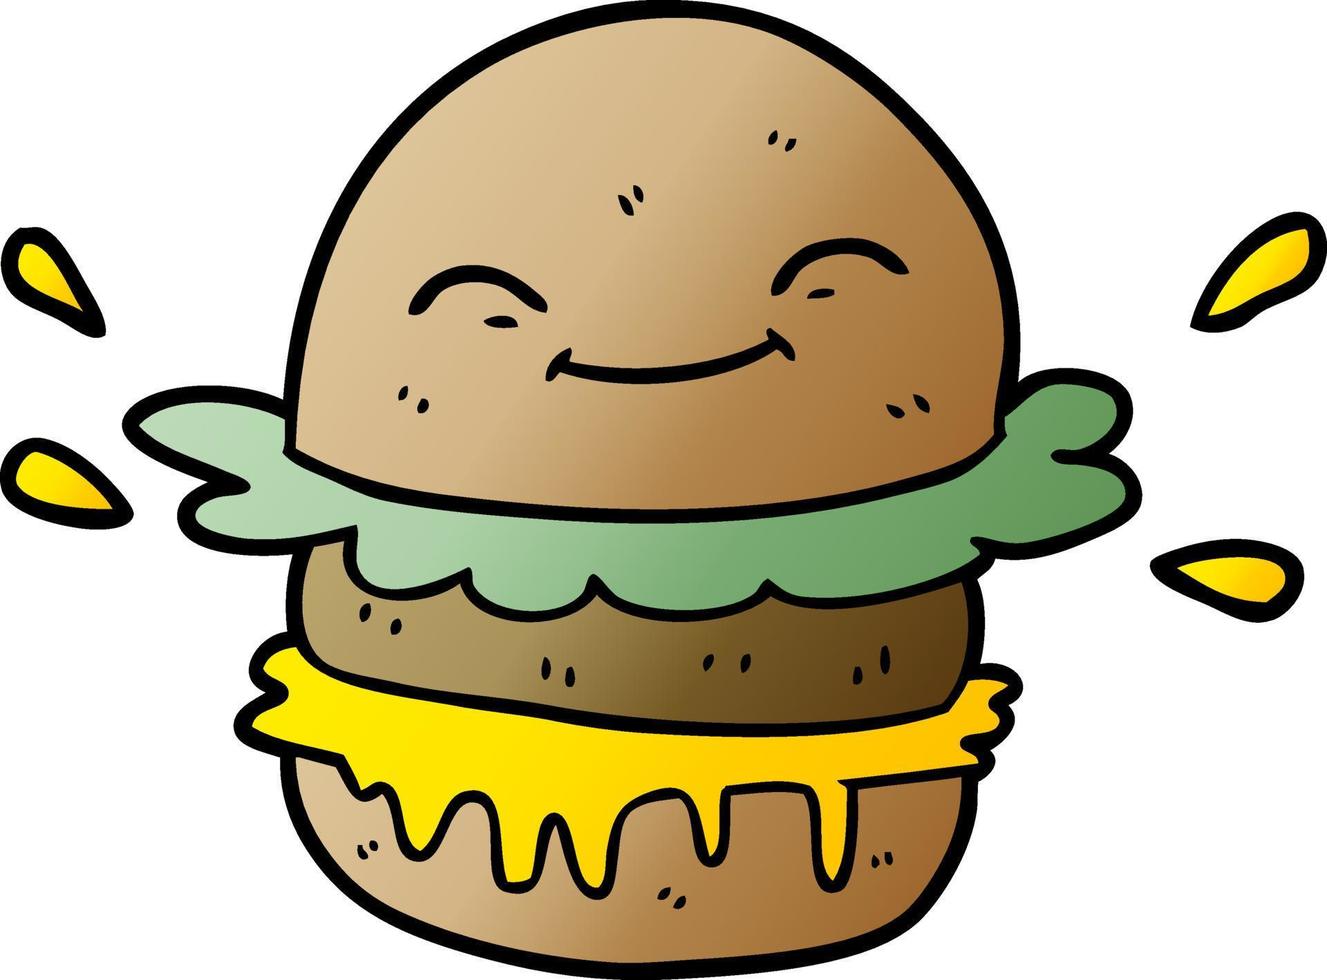 cartoon fast food burger vector